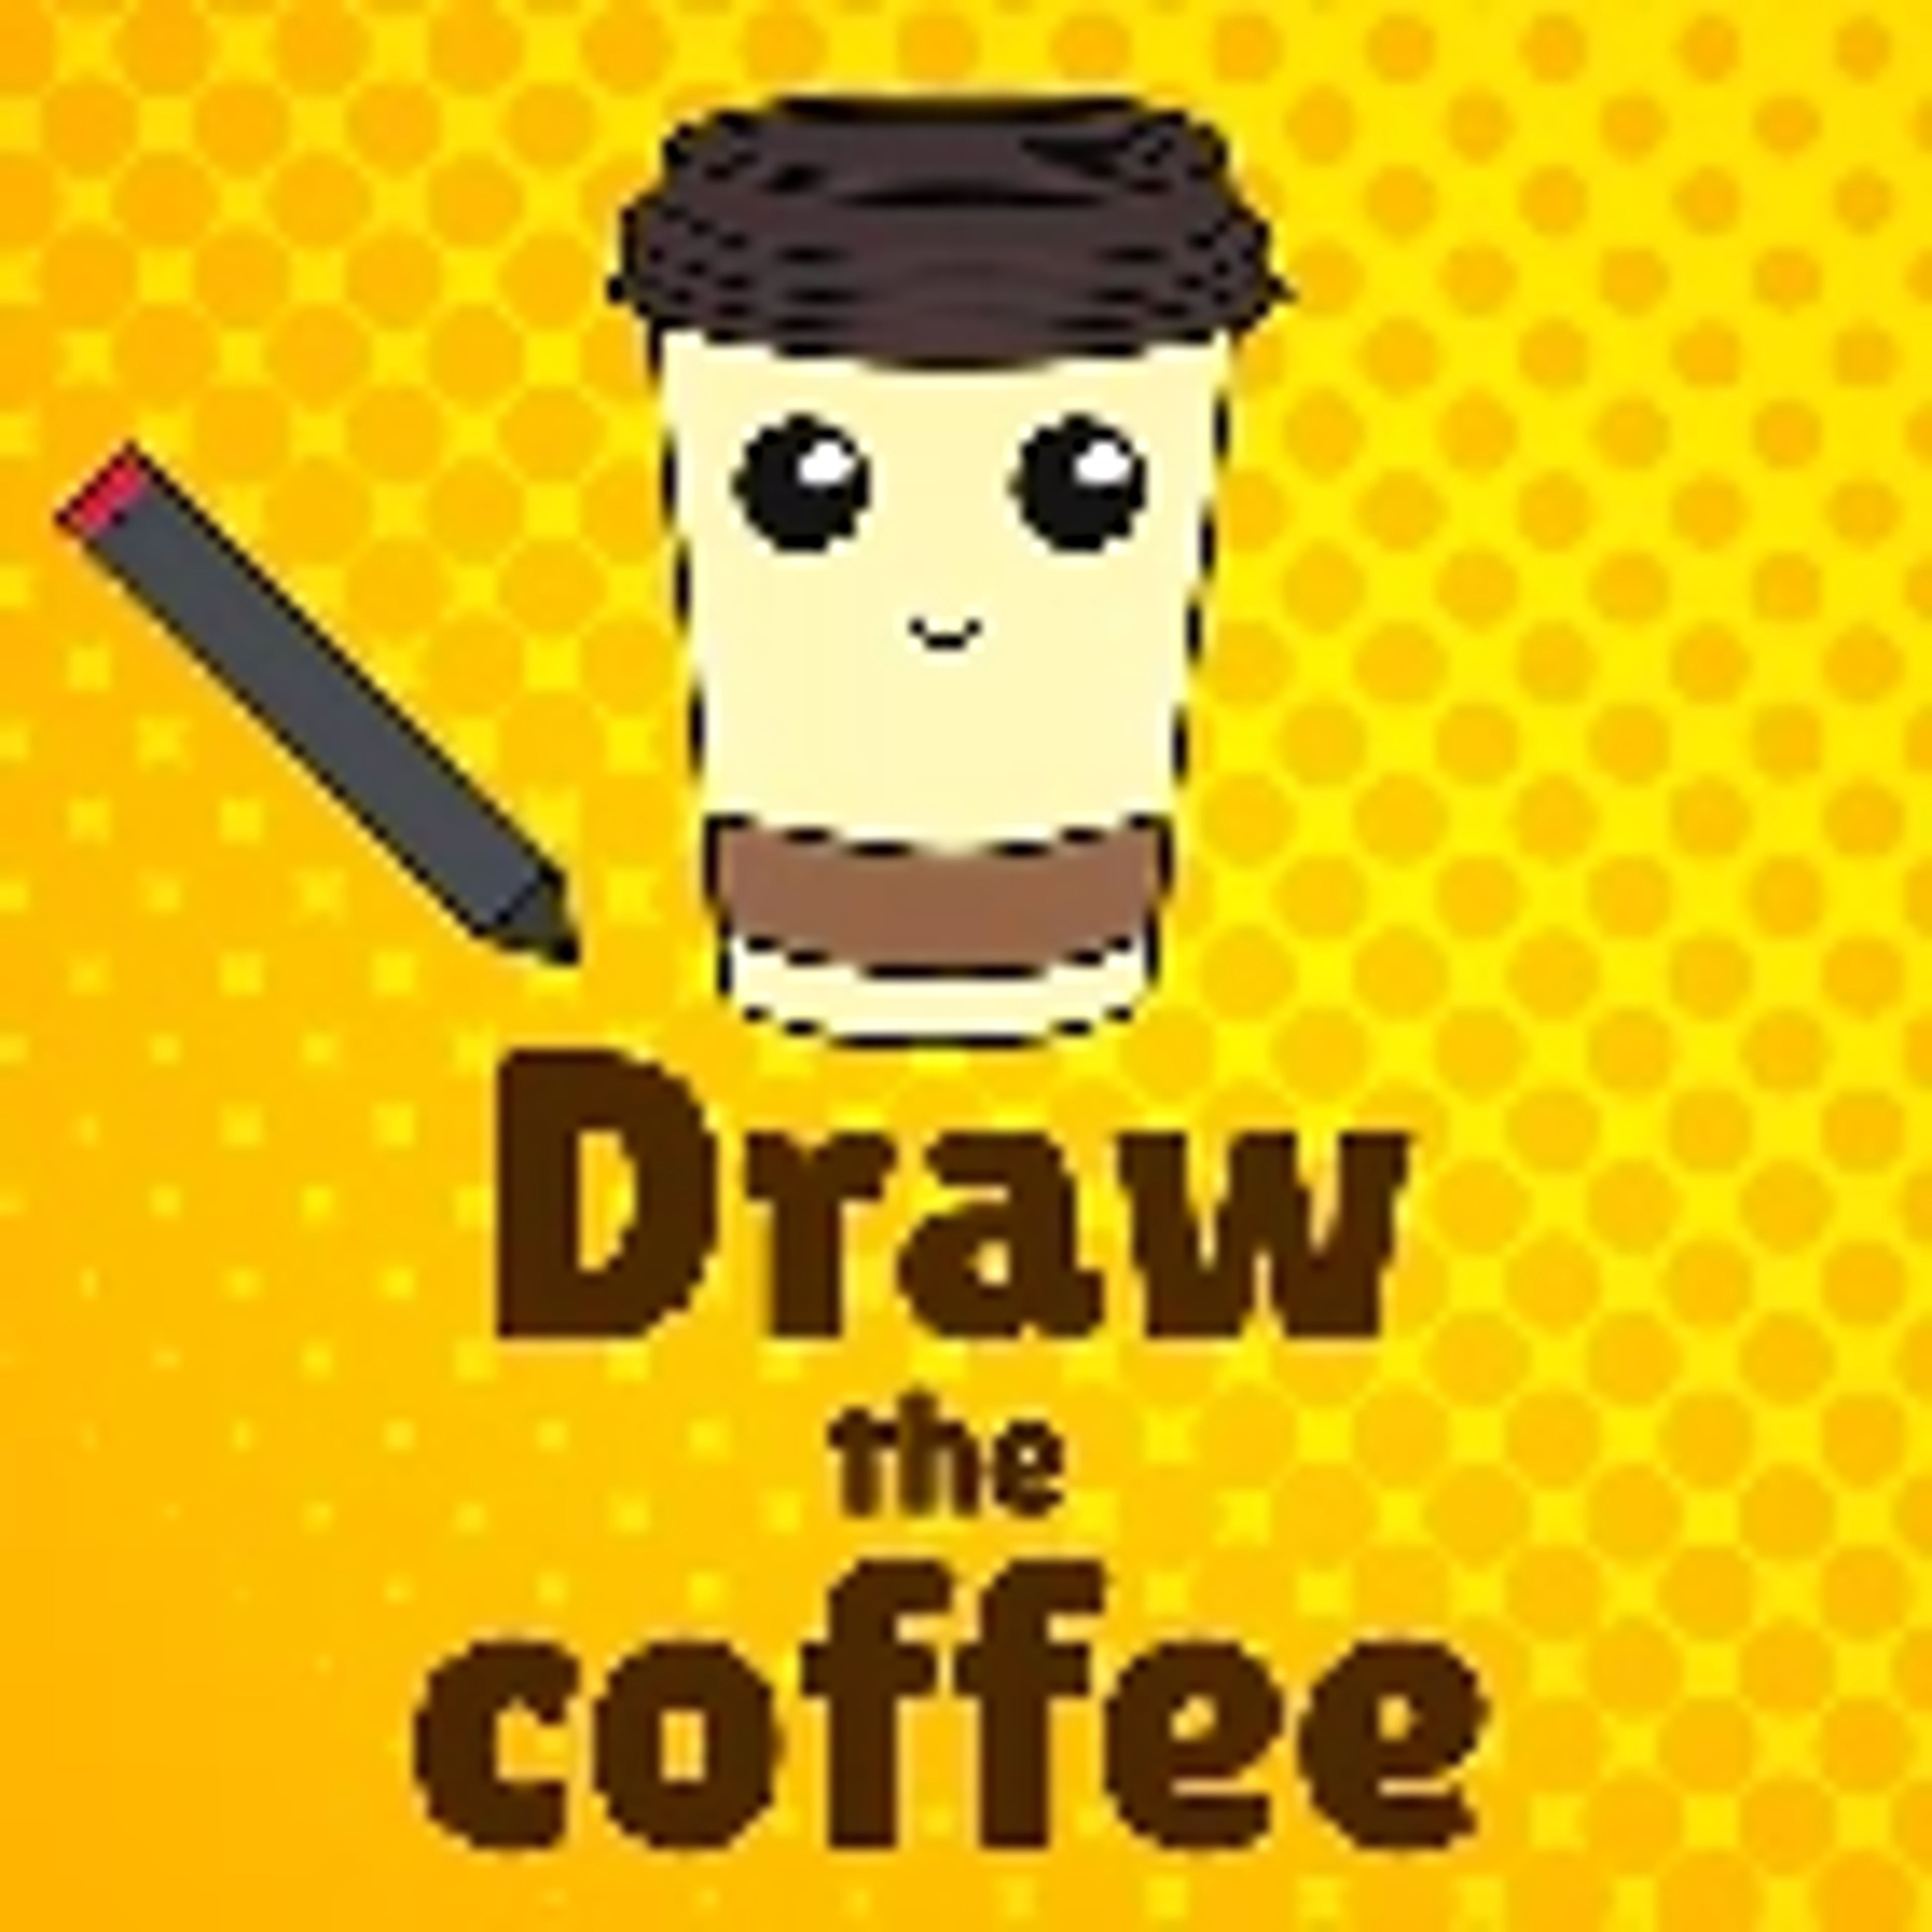 Draw the coffee